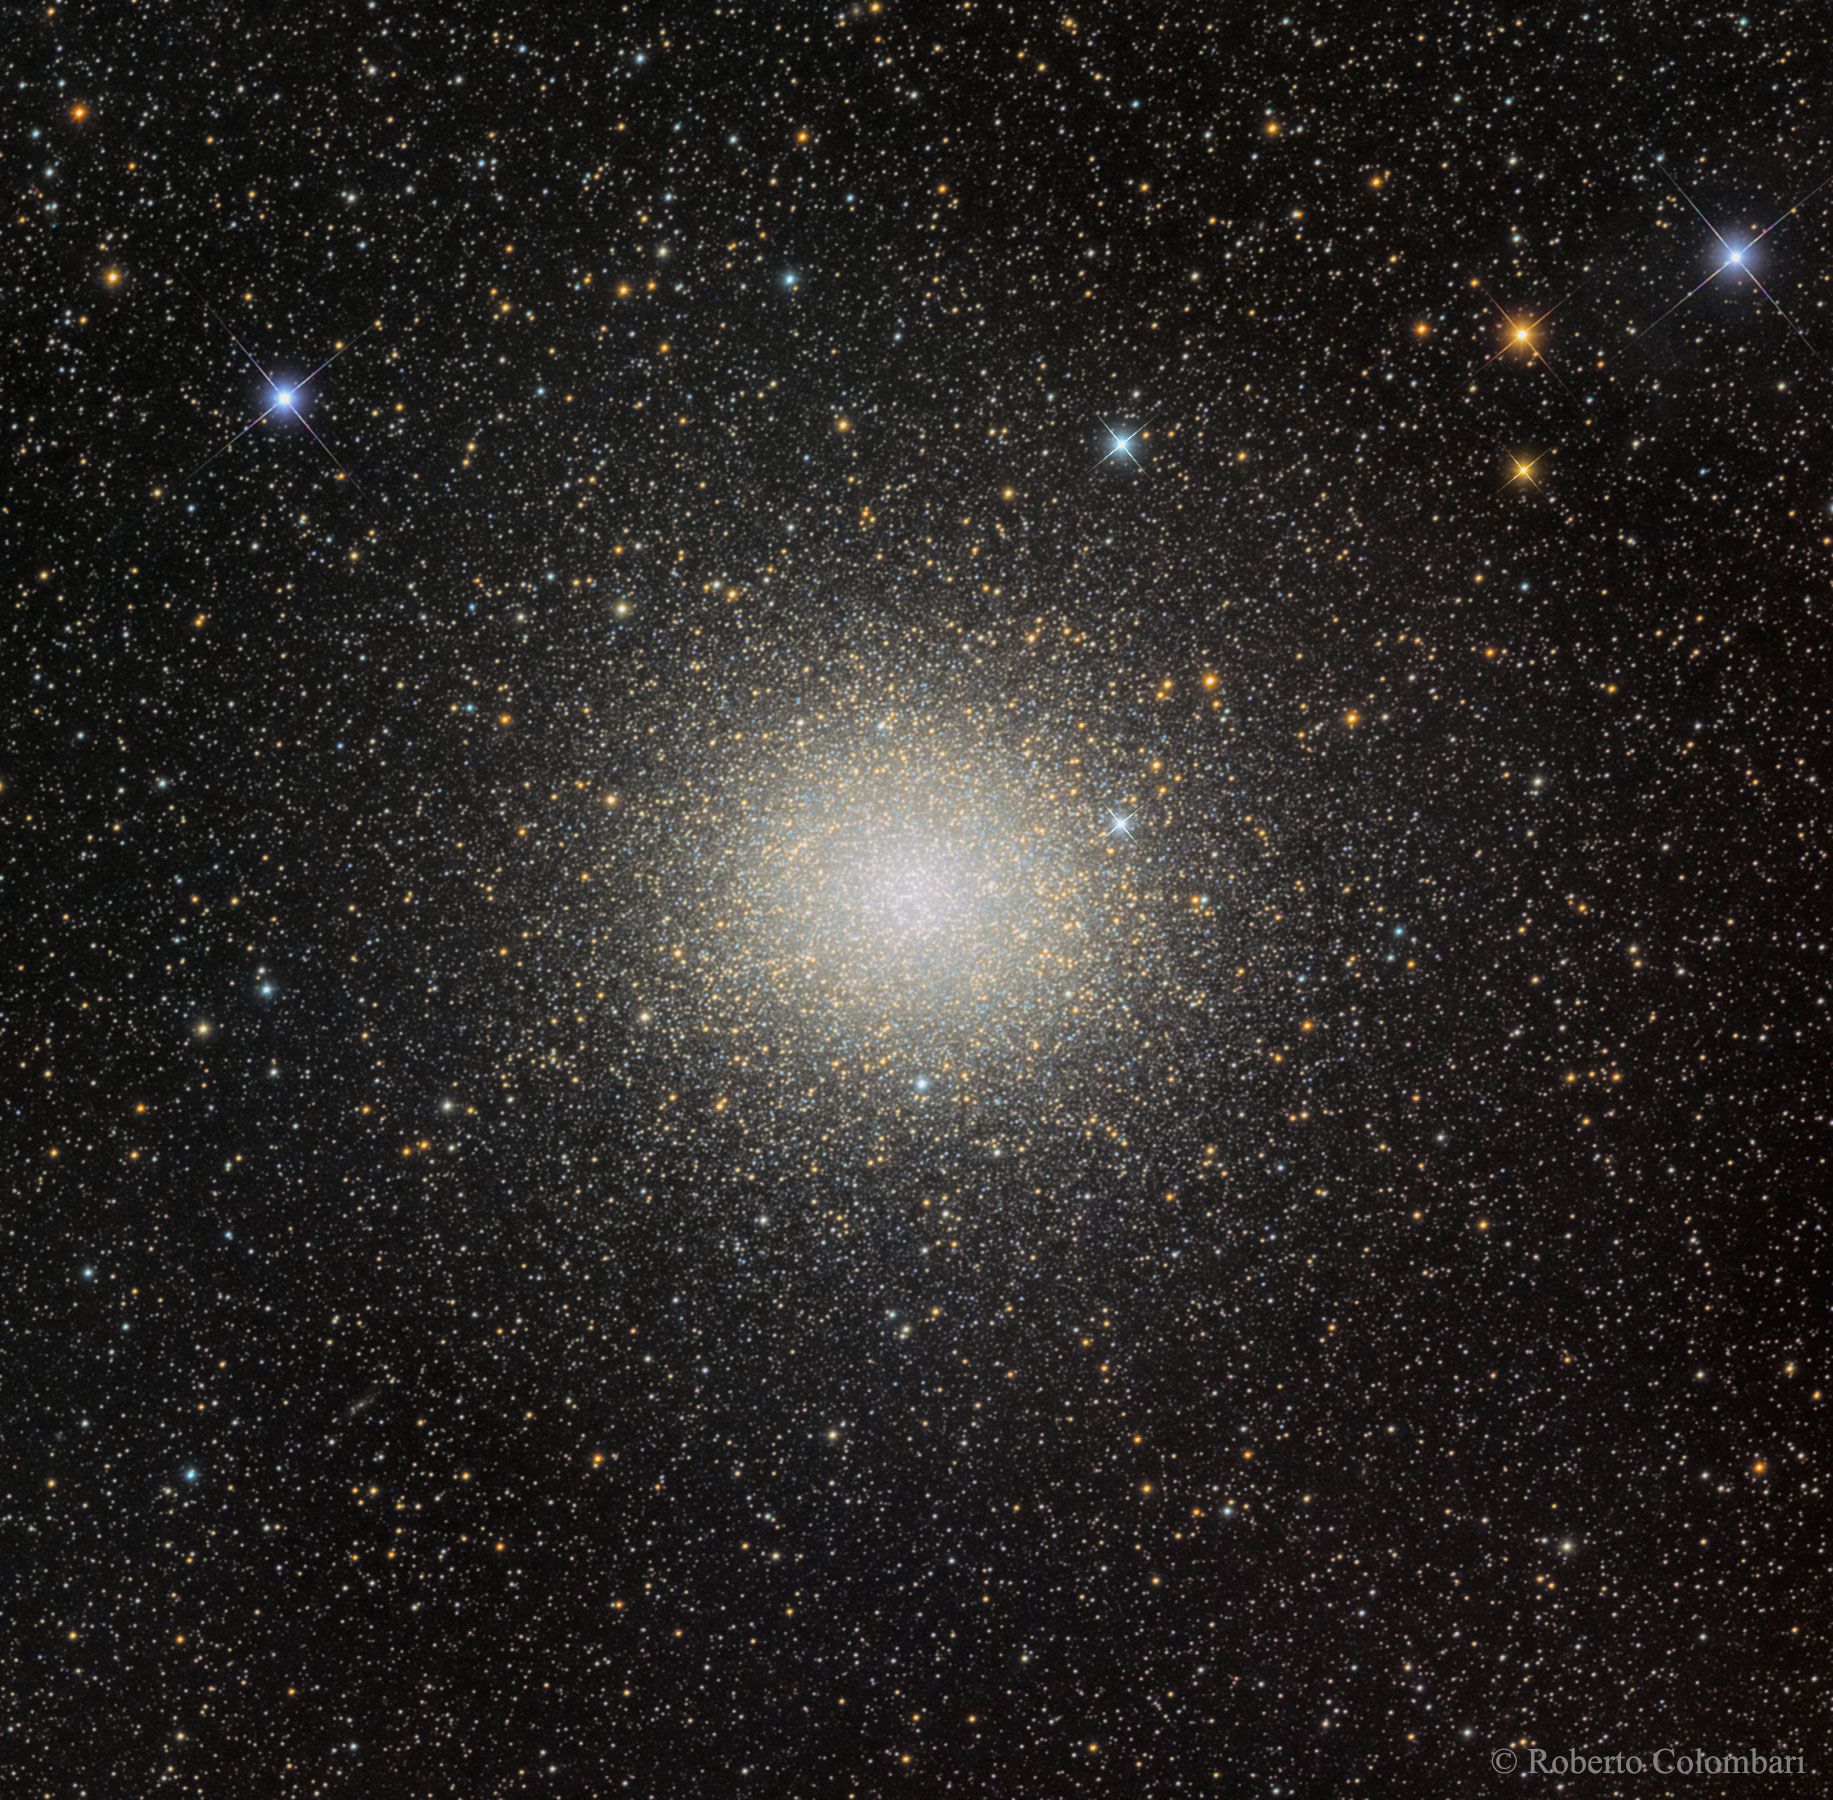  Omega Centauri: The Brightest Globular Star Cluster 